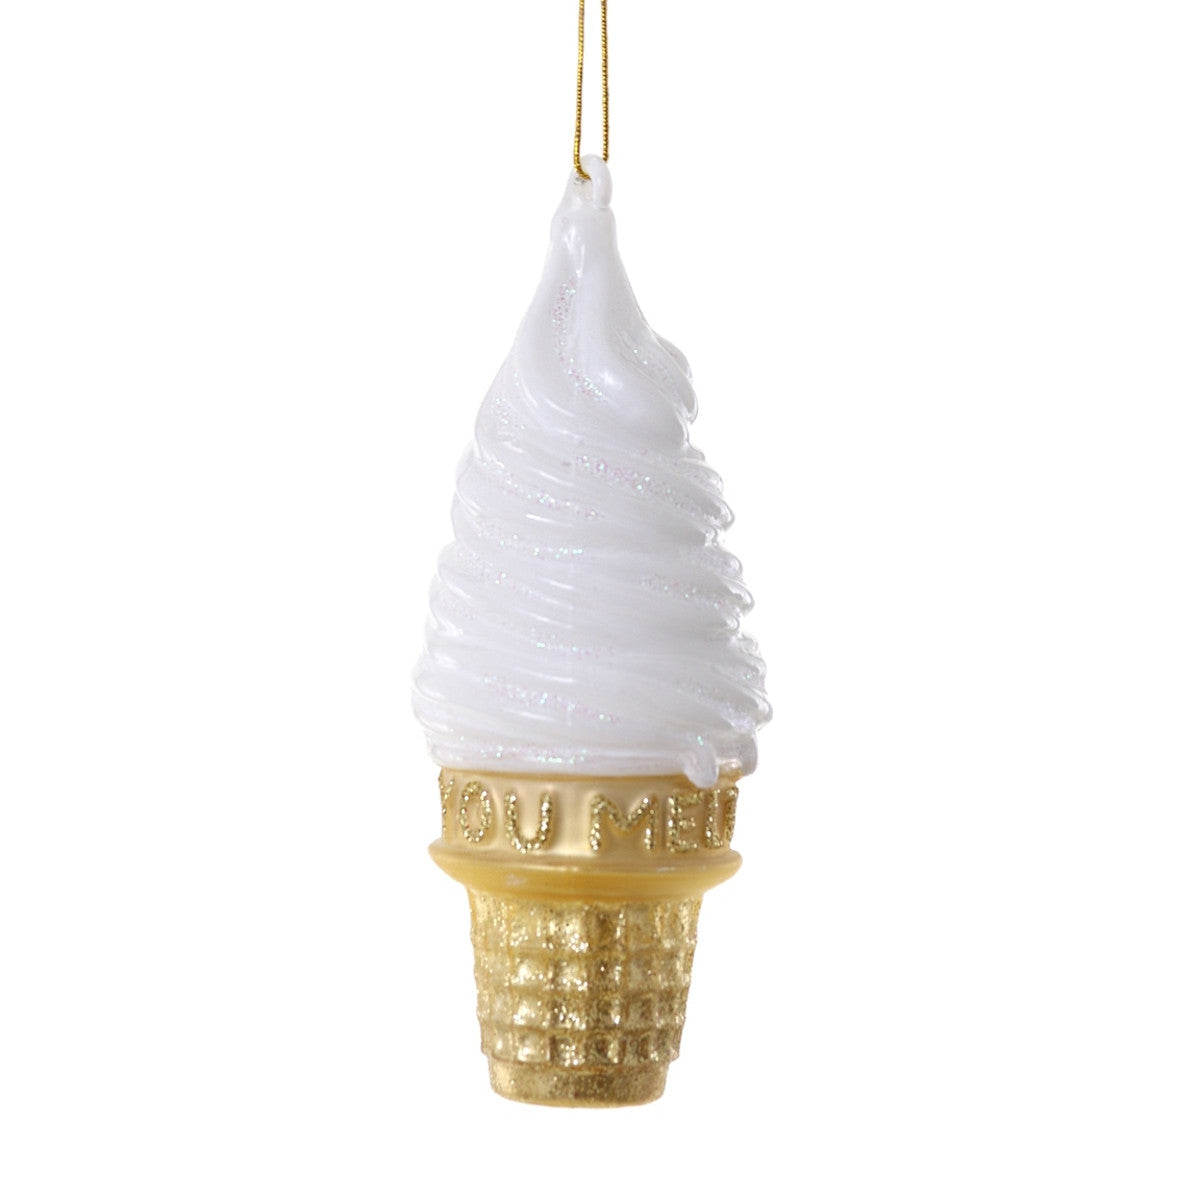 You Melt My Heart Ice Cream Cone Ornament